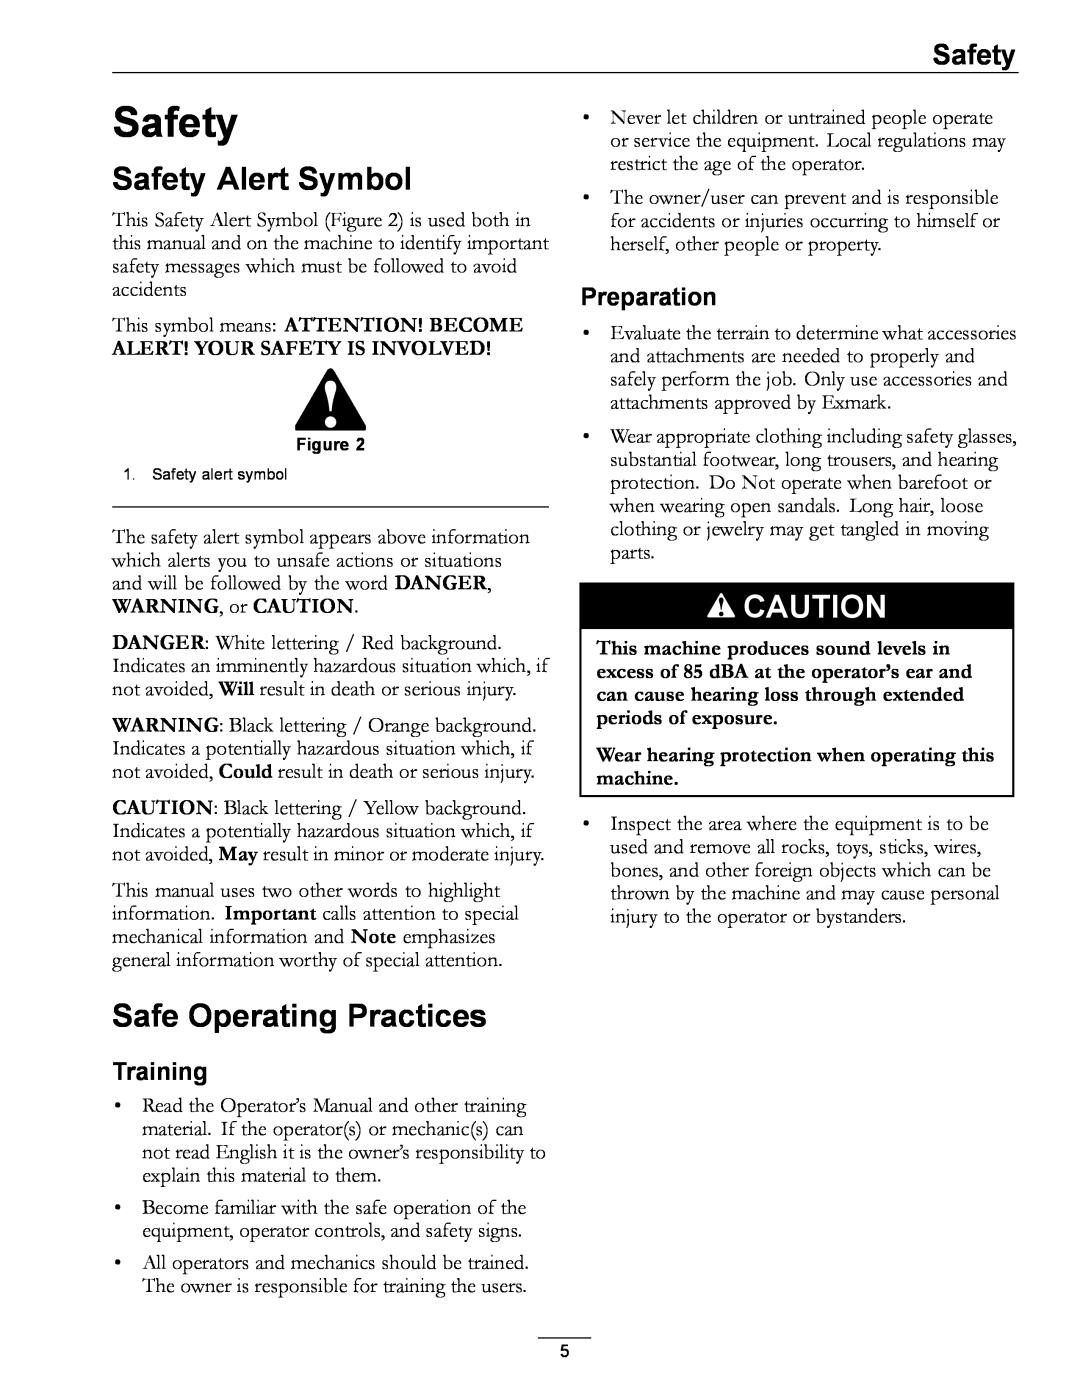 Exmark 000 & higher manual Safety Alert Symbol, Safe Operating Practices, Training, Preparation 